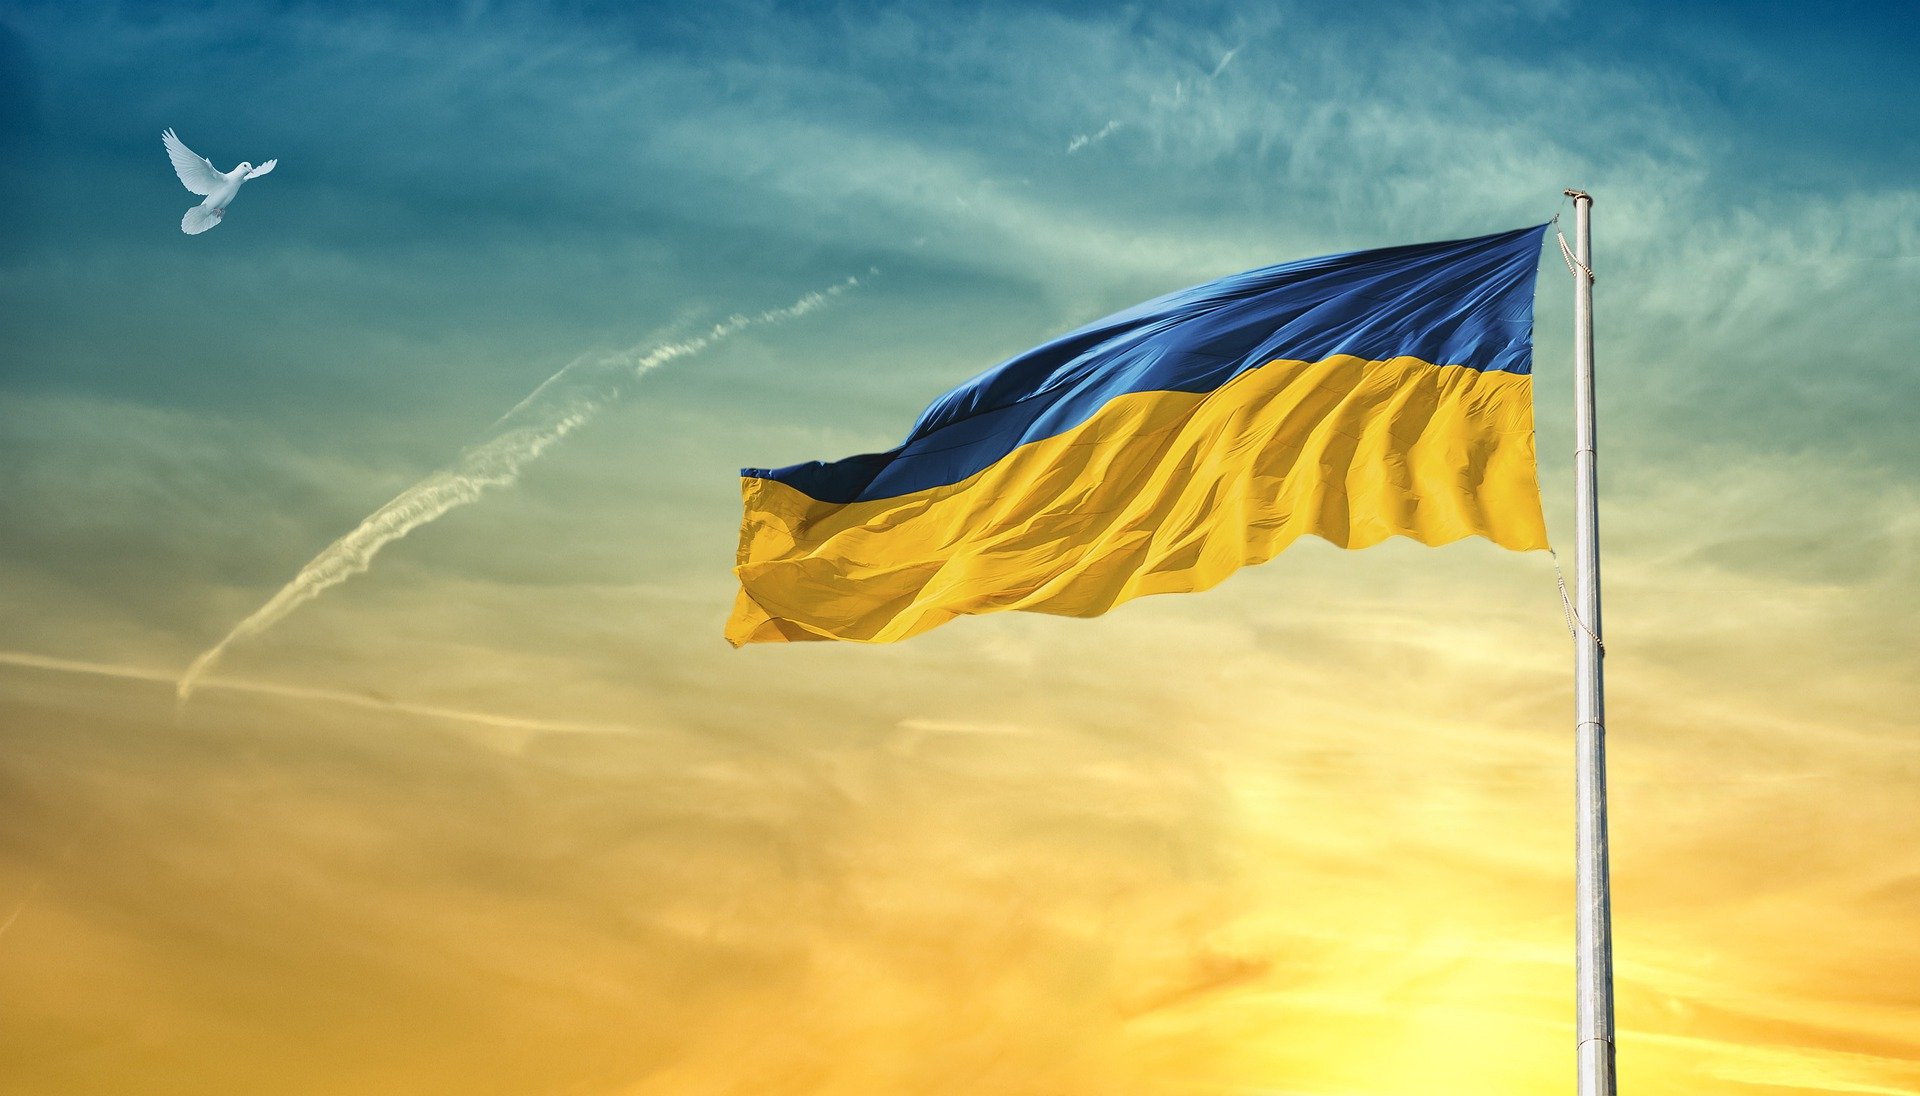 Specustawa o pomocy obywatelom Ukrainy